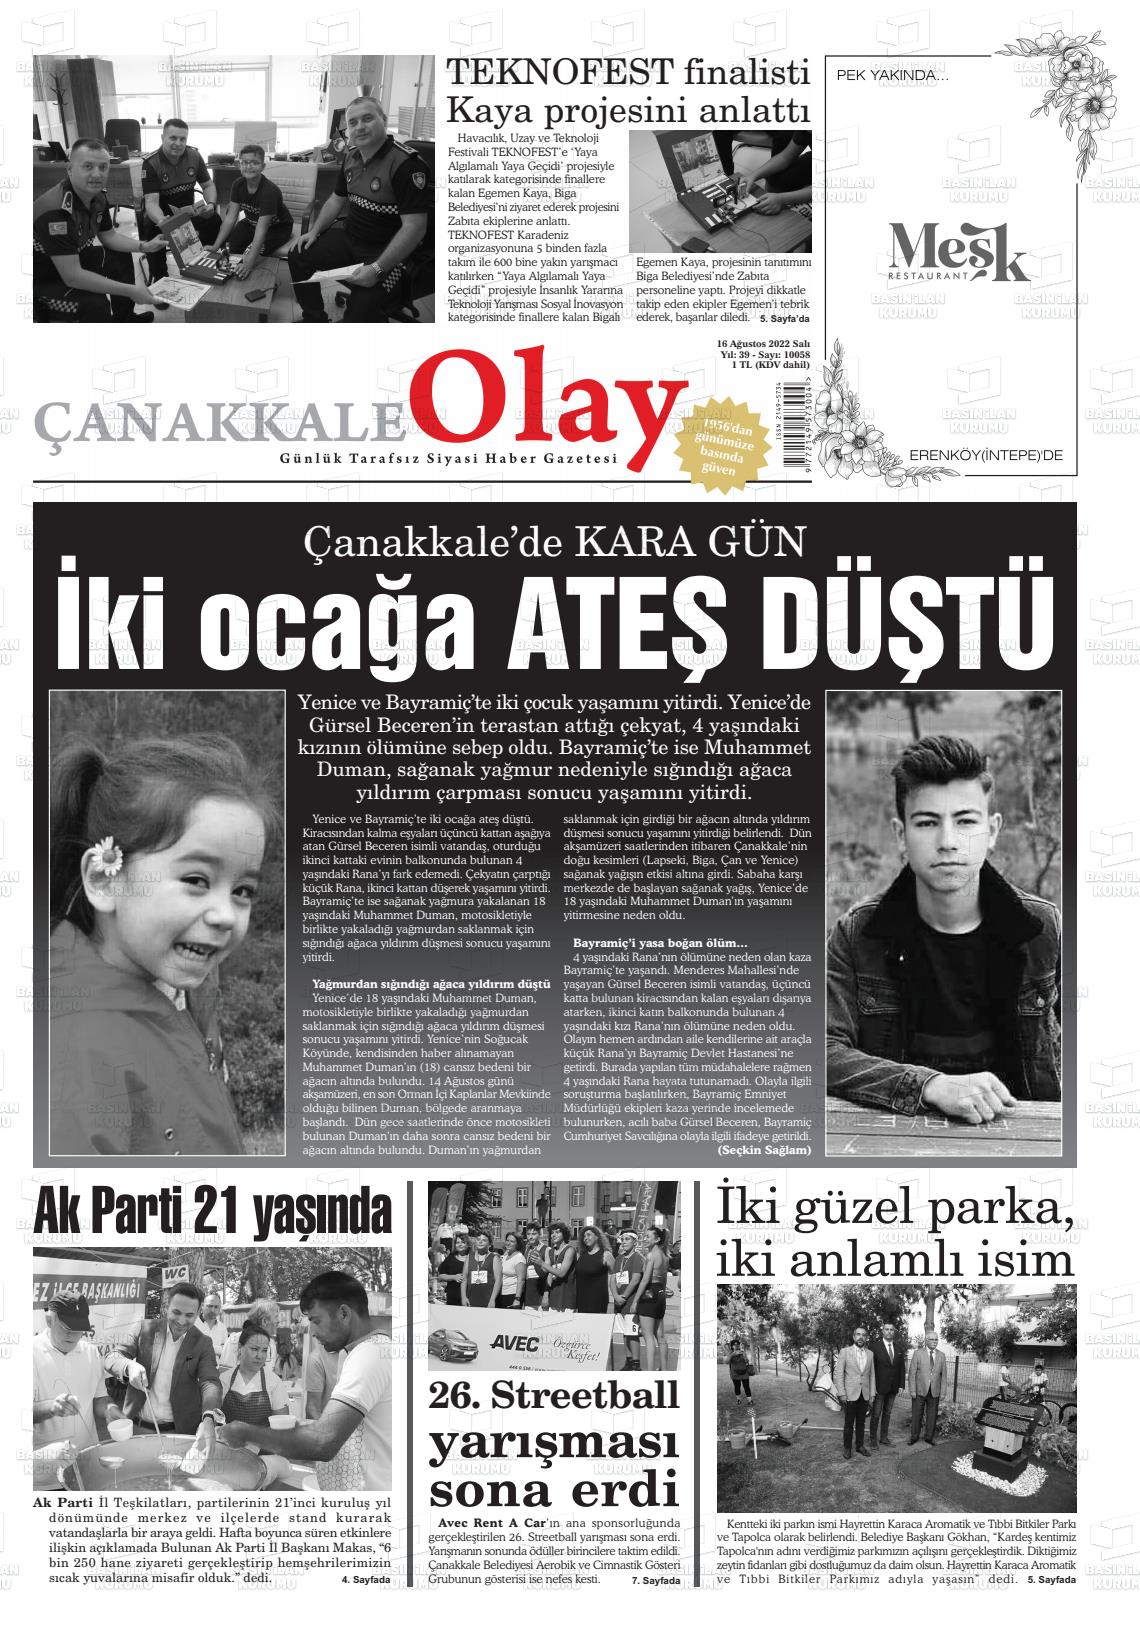 16 Ağustos 2022 Çanakkale Olay Gazete Manşeti